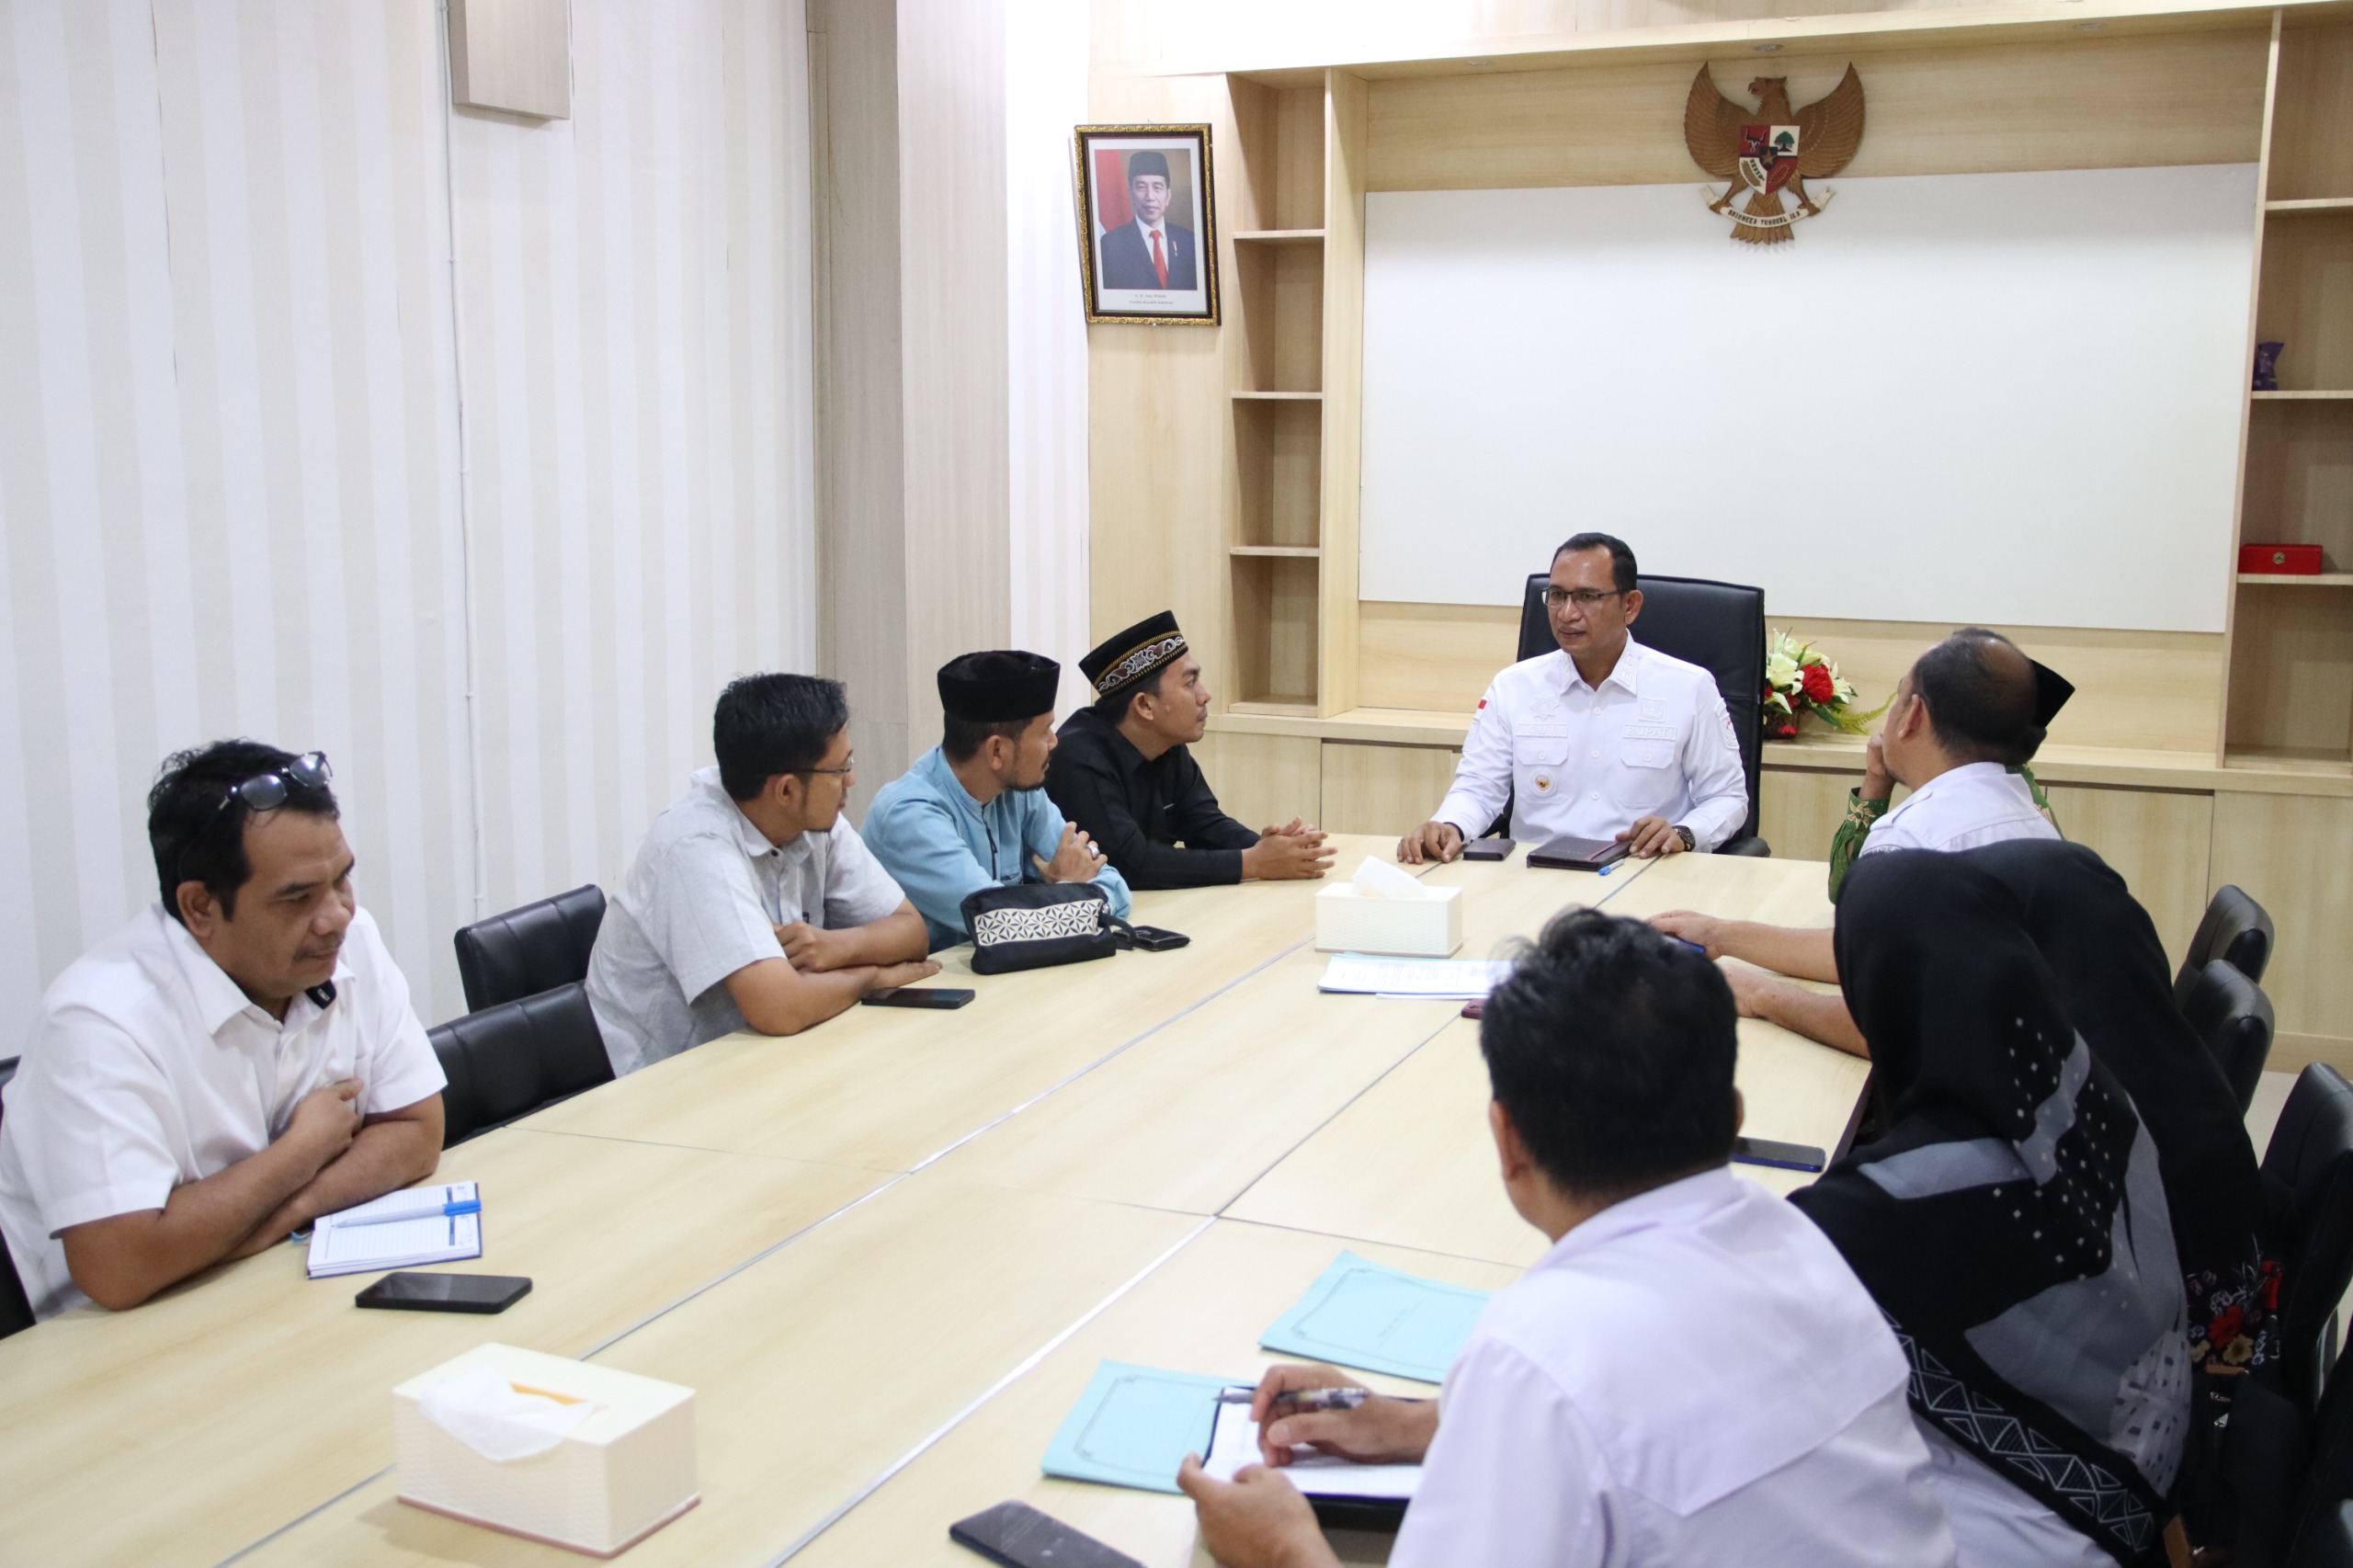 Pj Bupati Terima Kunjungan Audiensi BMK Aceh Selatan, Cut Syazalisma: Jaga Amanah Muzakki dan Munfiq